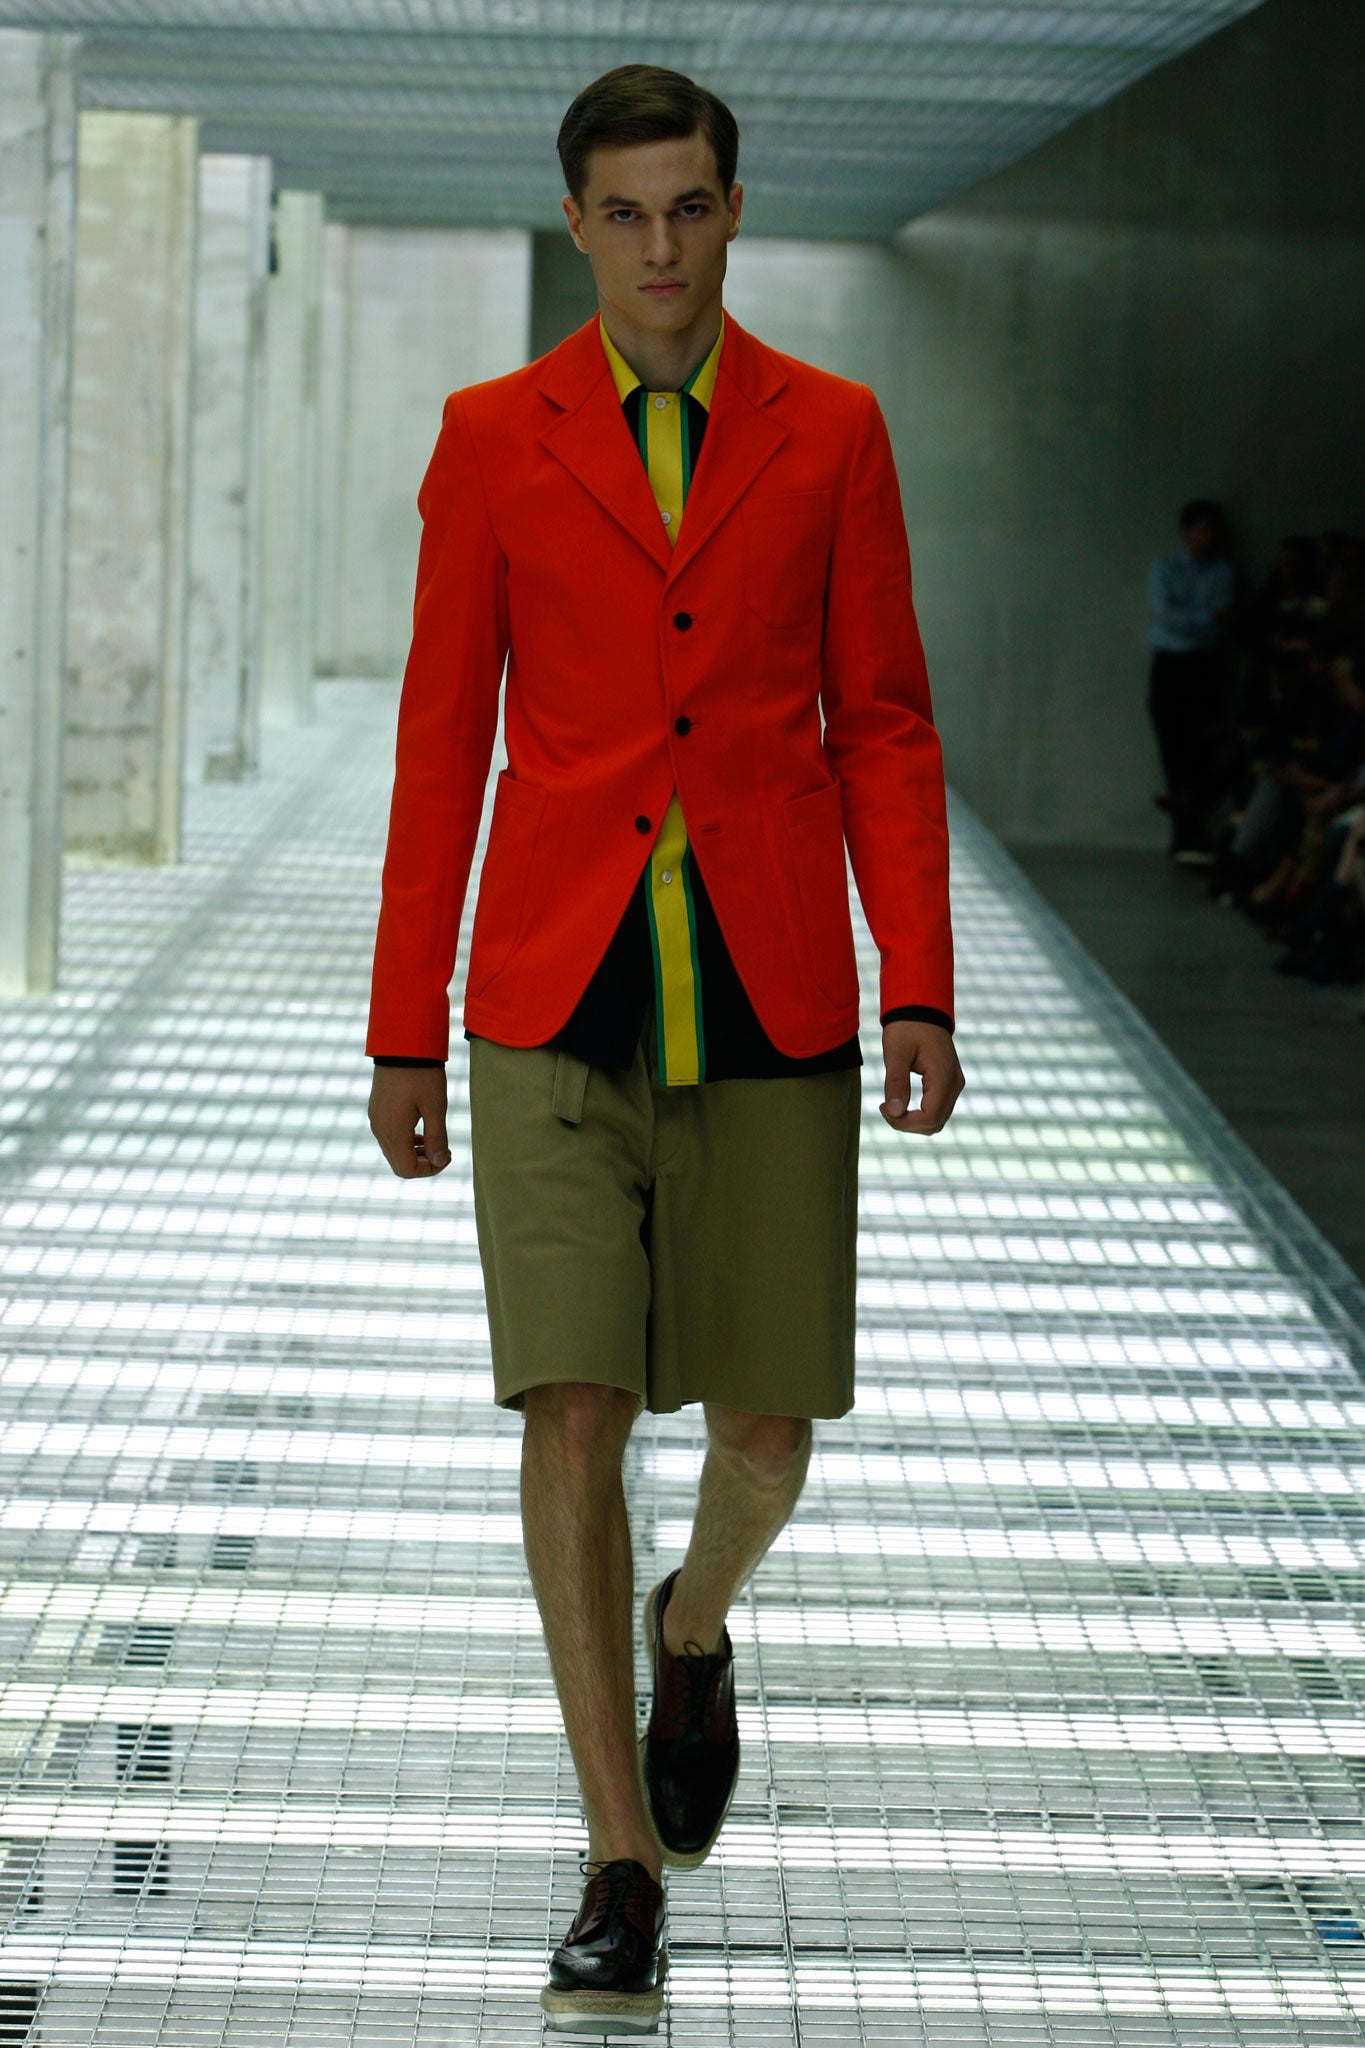 Miuccia Prada took inspiration from fast food uniforms in 2011